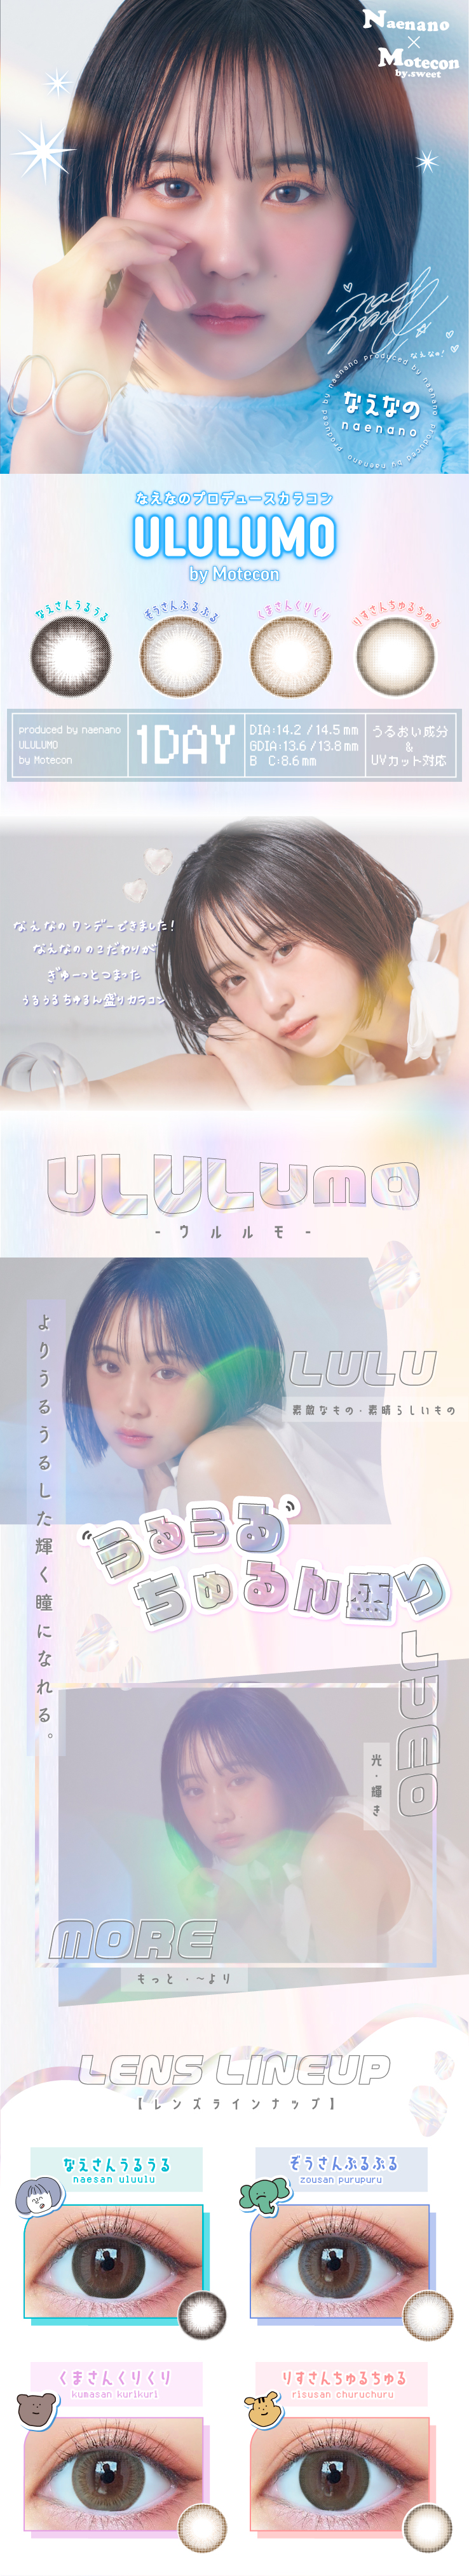 ULULUMO by Motecon(ウルルモバイモテコン)【度あり/度なし• ワンデー • DIA14.2/14.5】